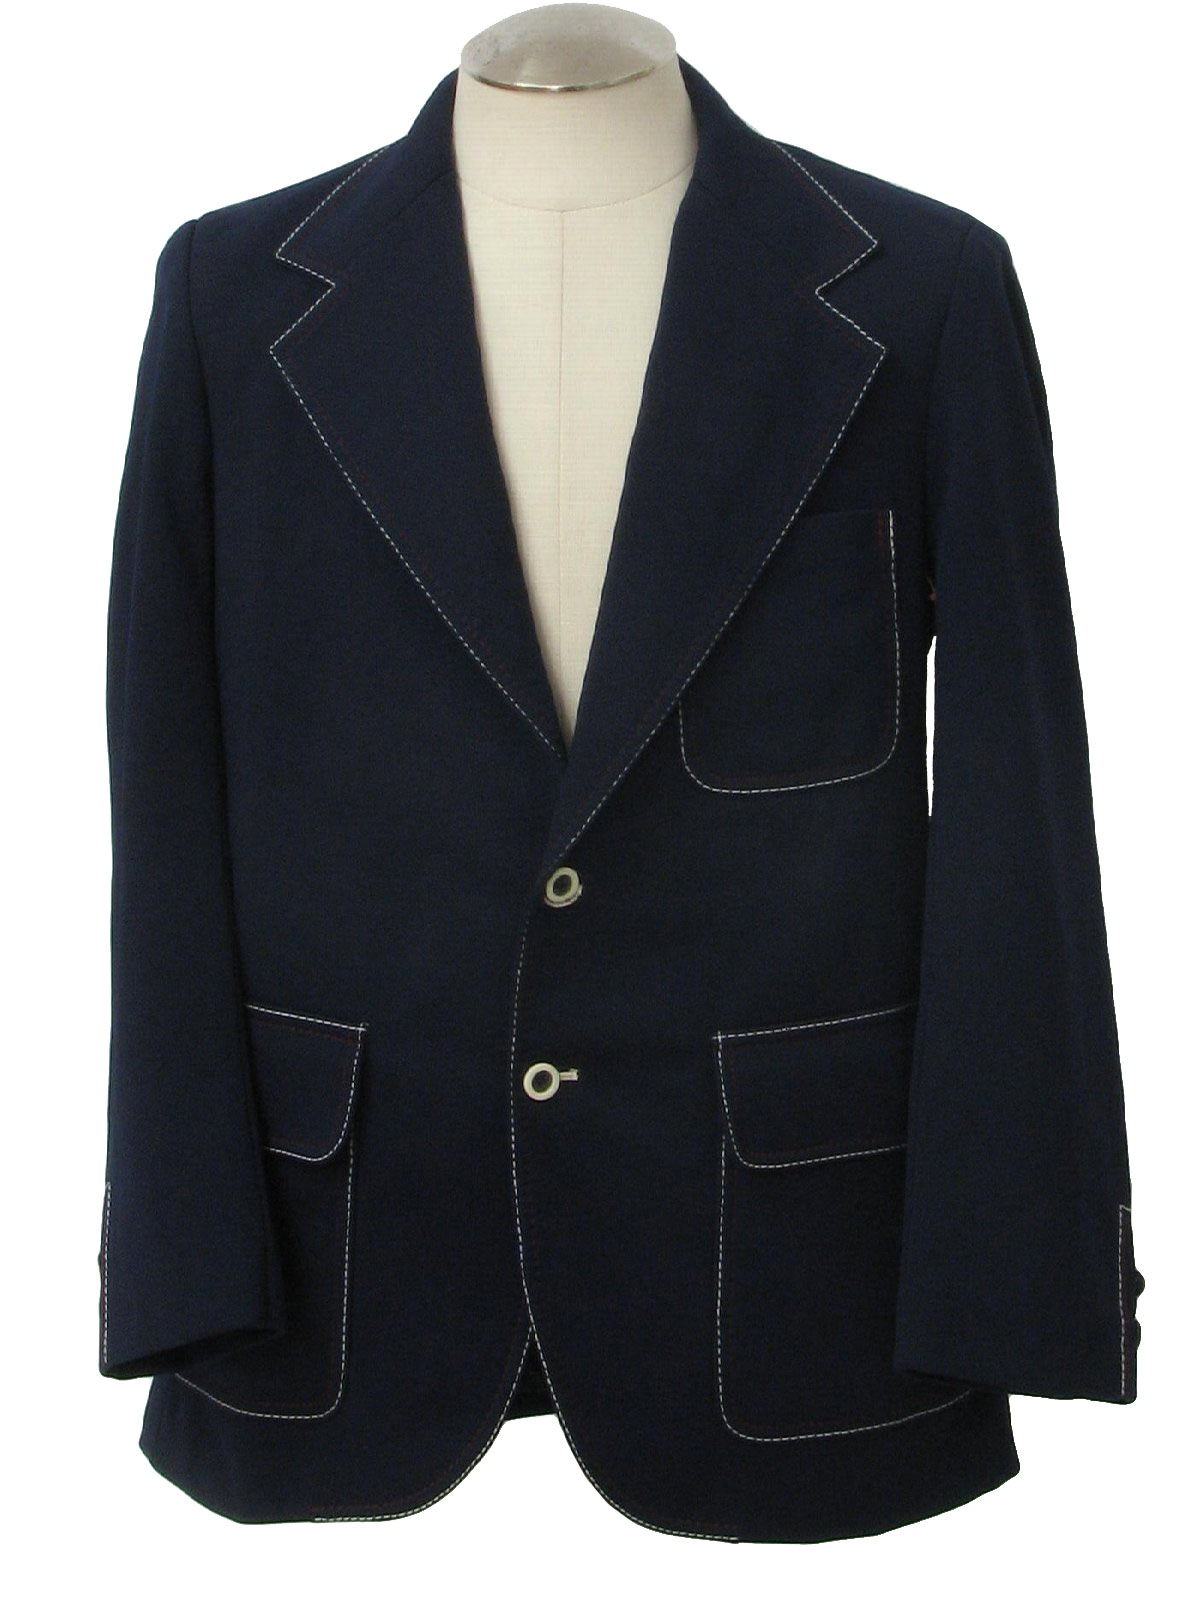 1970's Jacket (Missing Label): 70s -Missing Label- Mens royal blue with ...